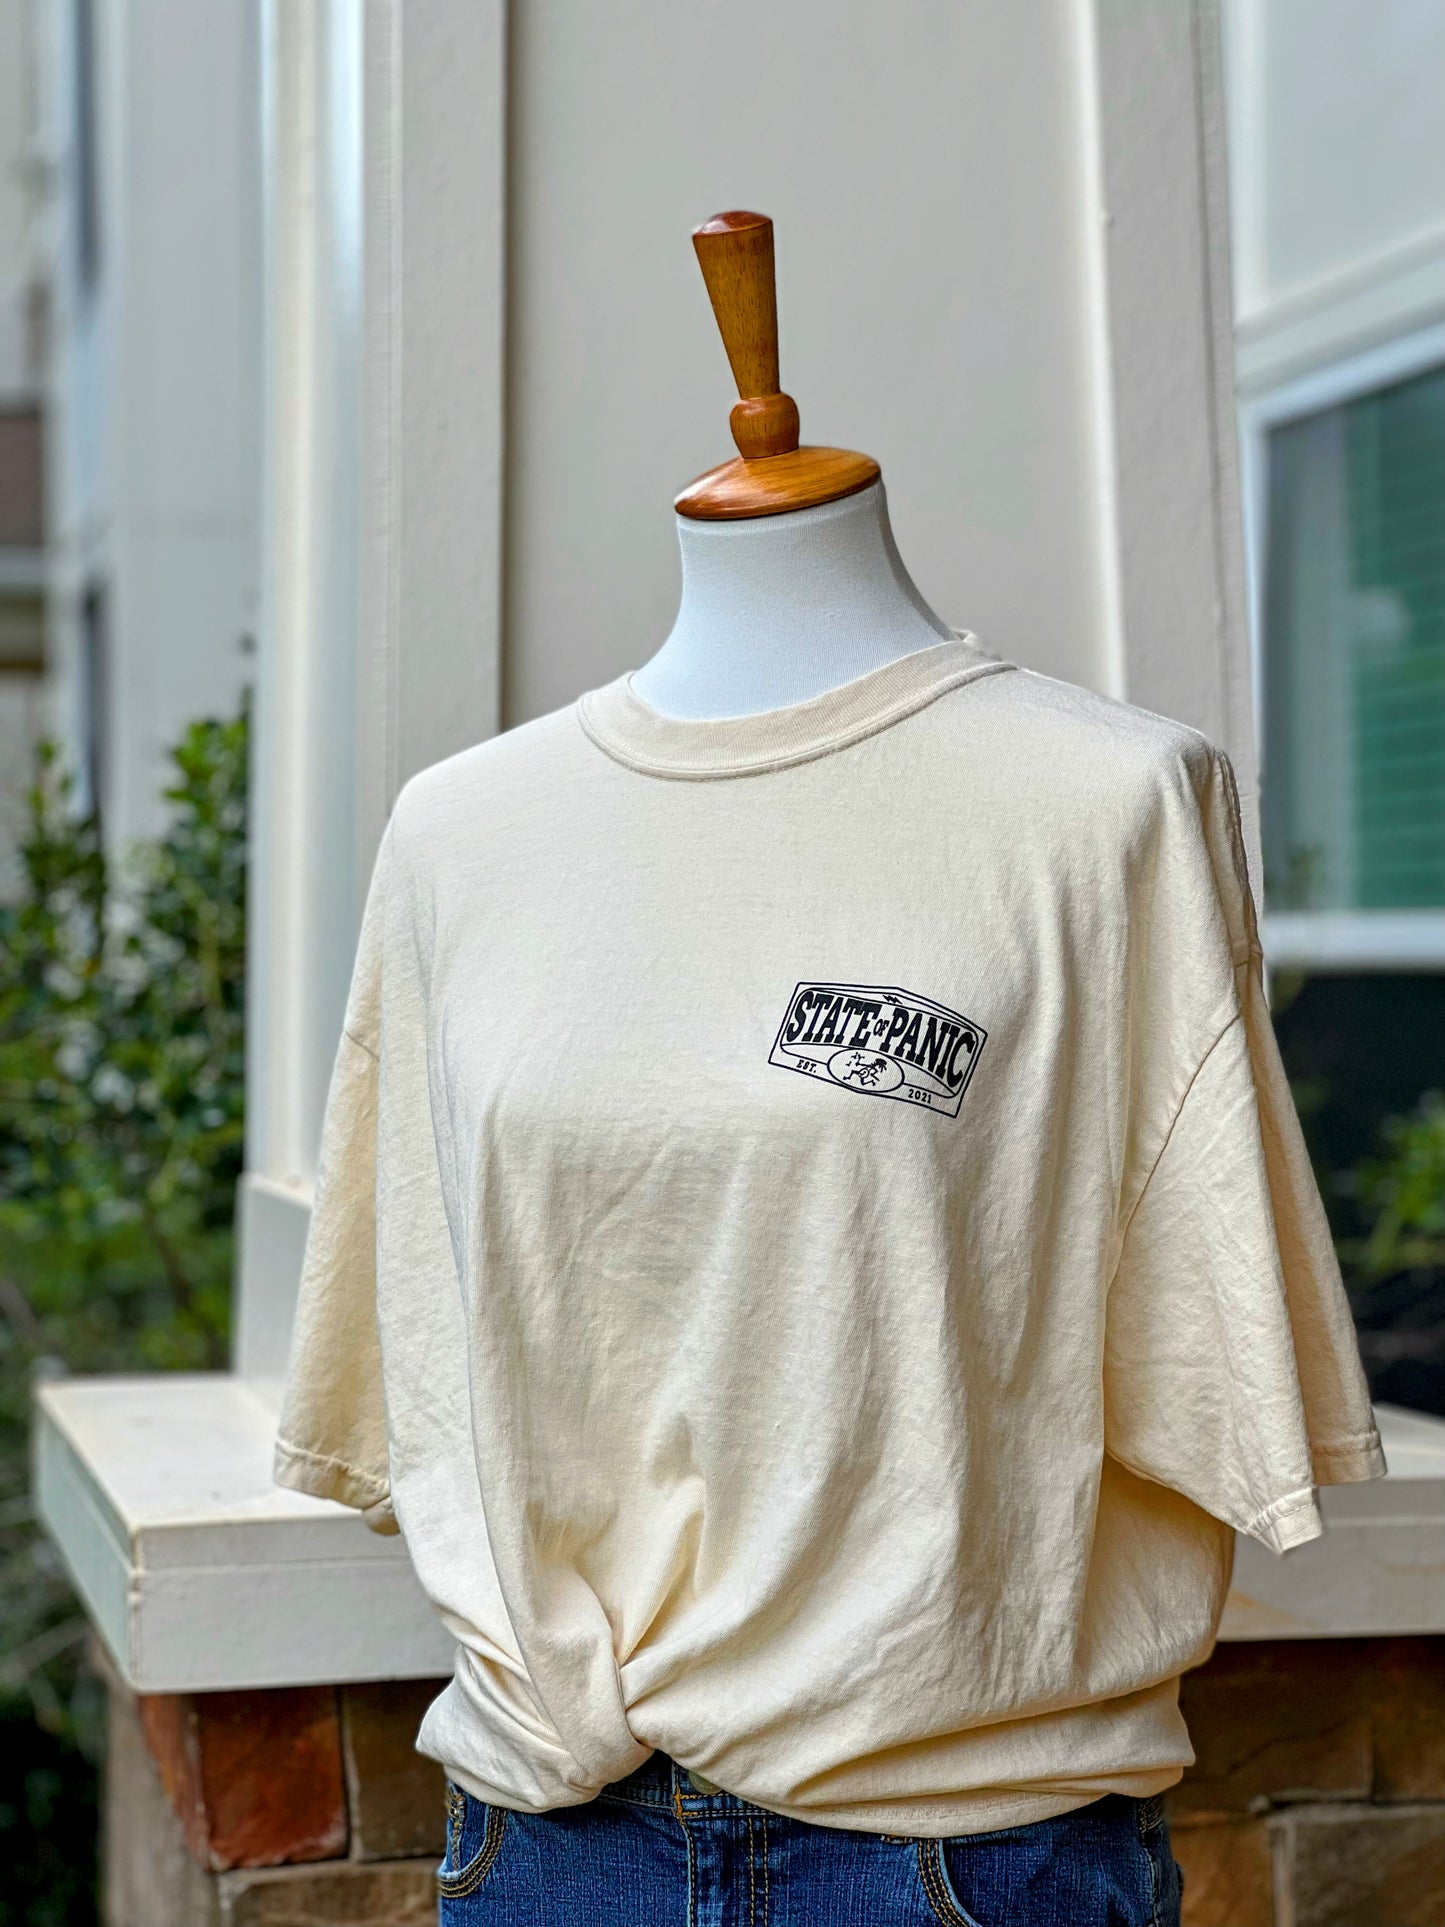 Widespread Panic "Diner" T-Shirt ( Back Design )